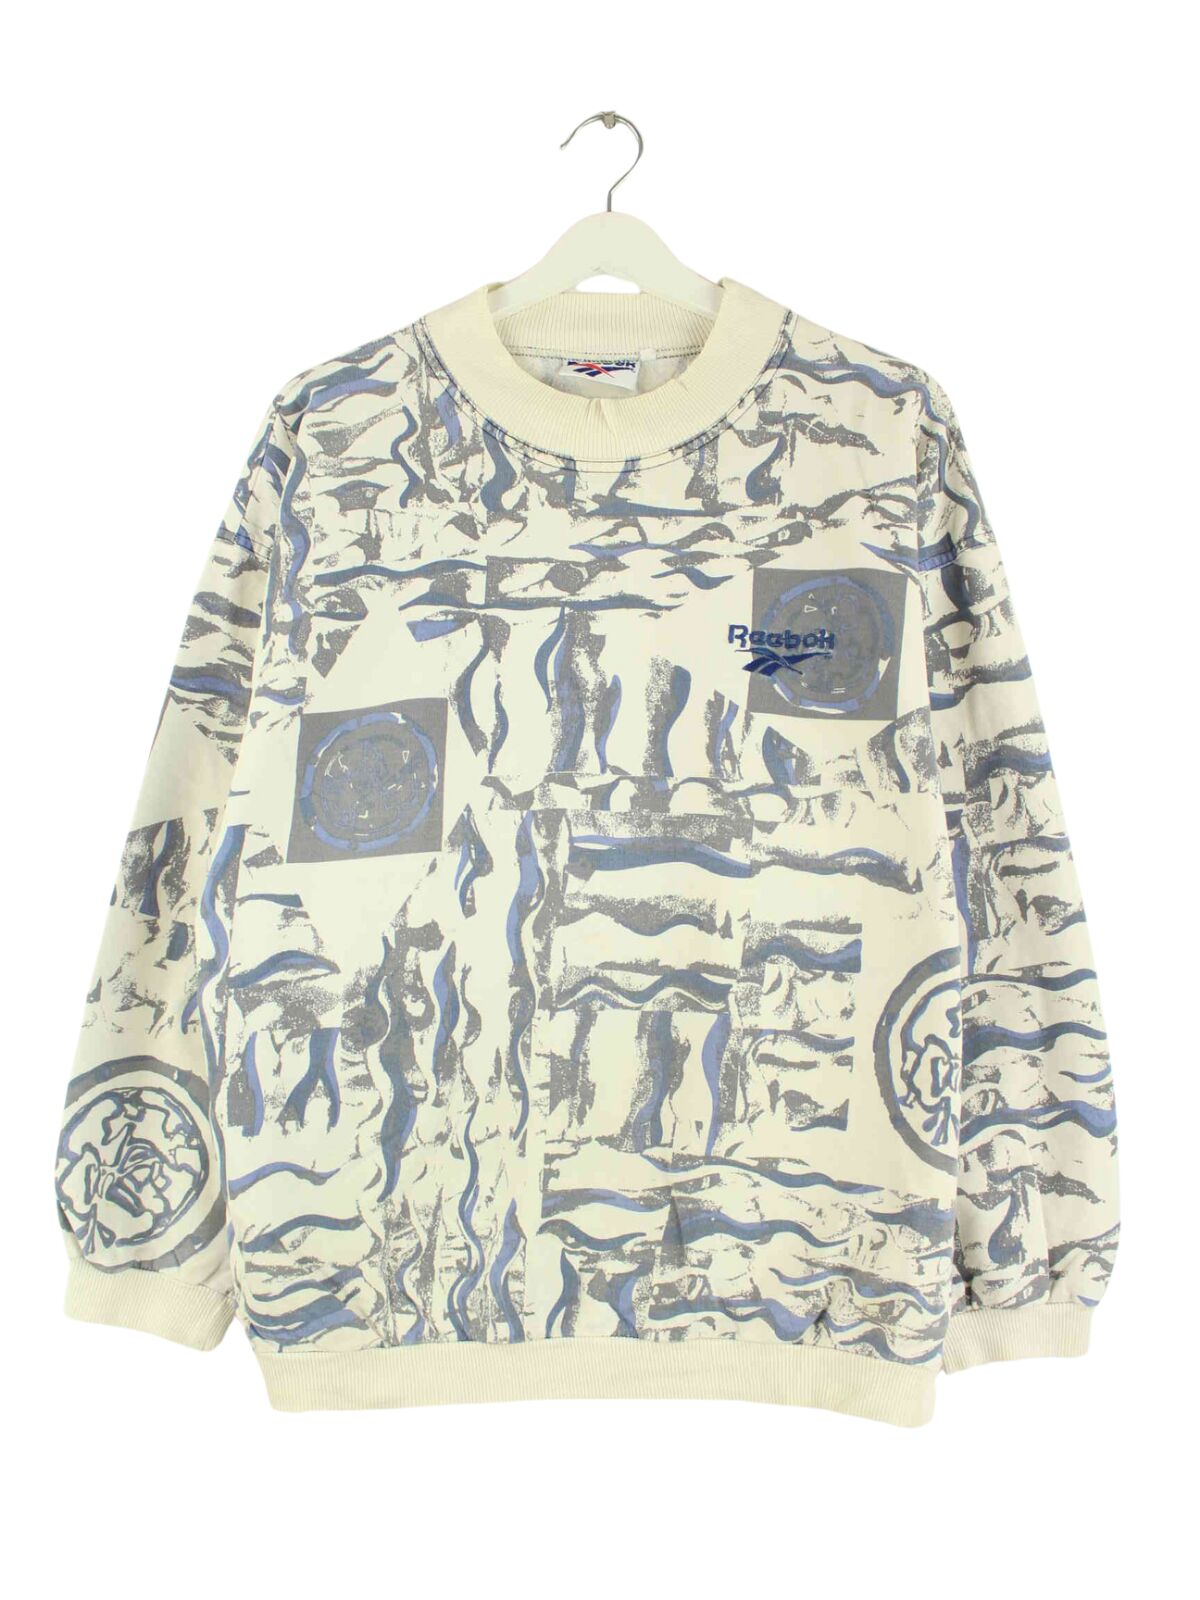 Reebok 90s Vintage Crazy Pattern Sweater Beige L (front image)